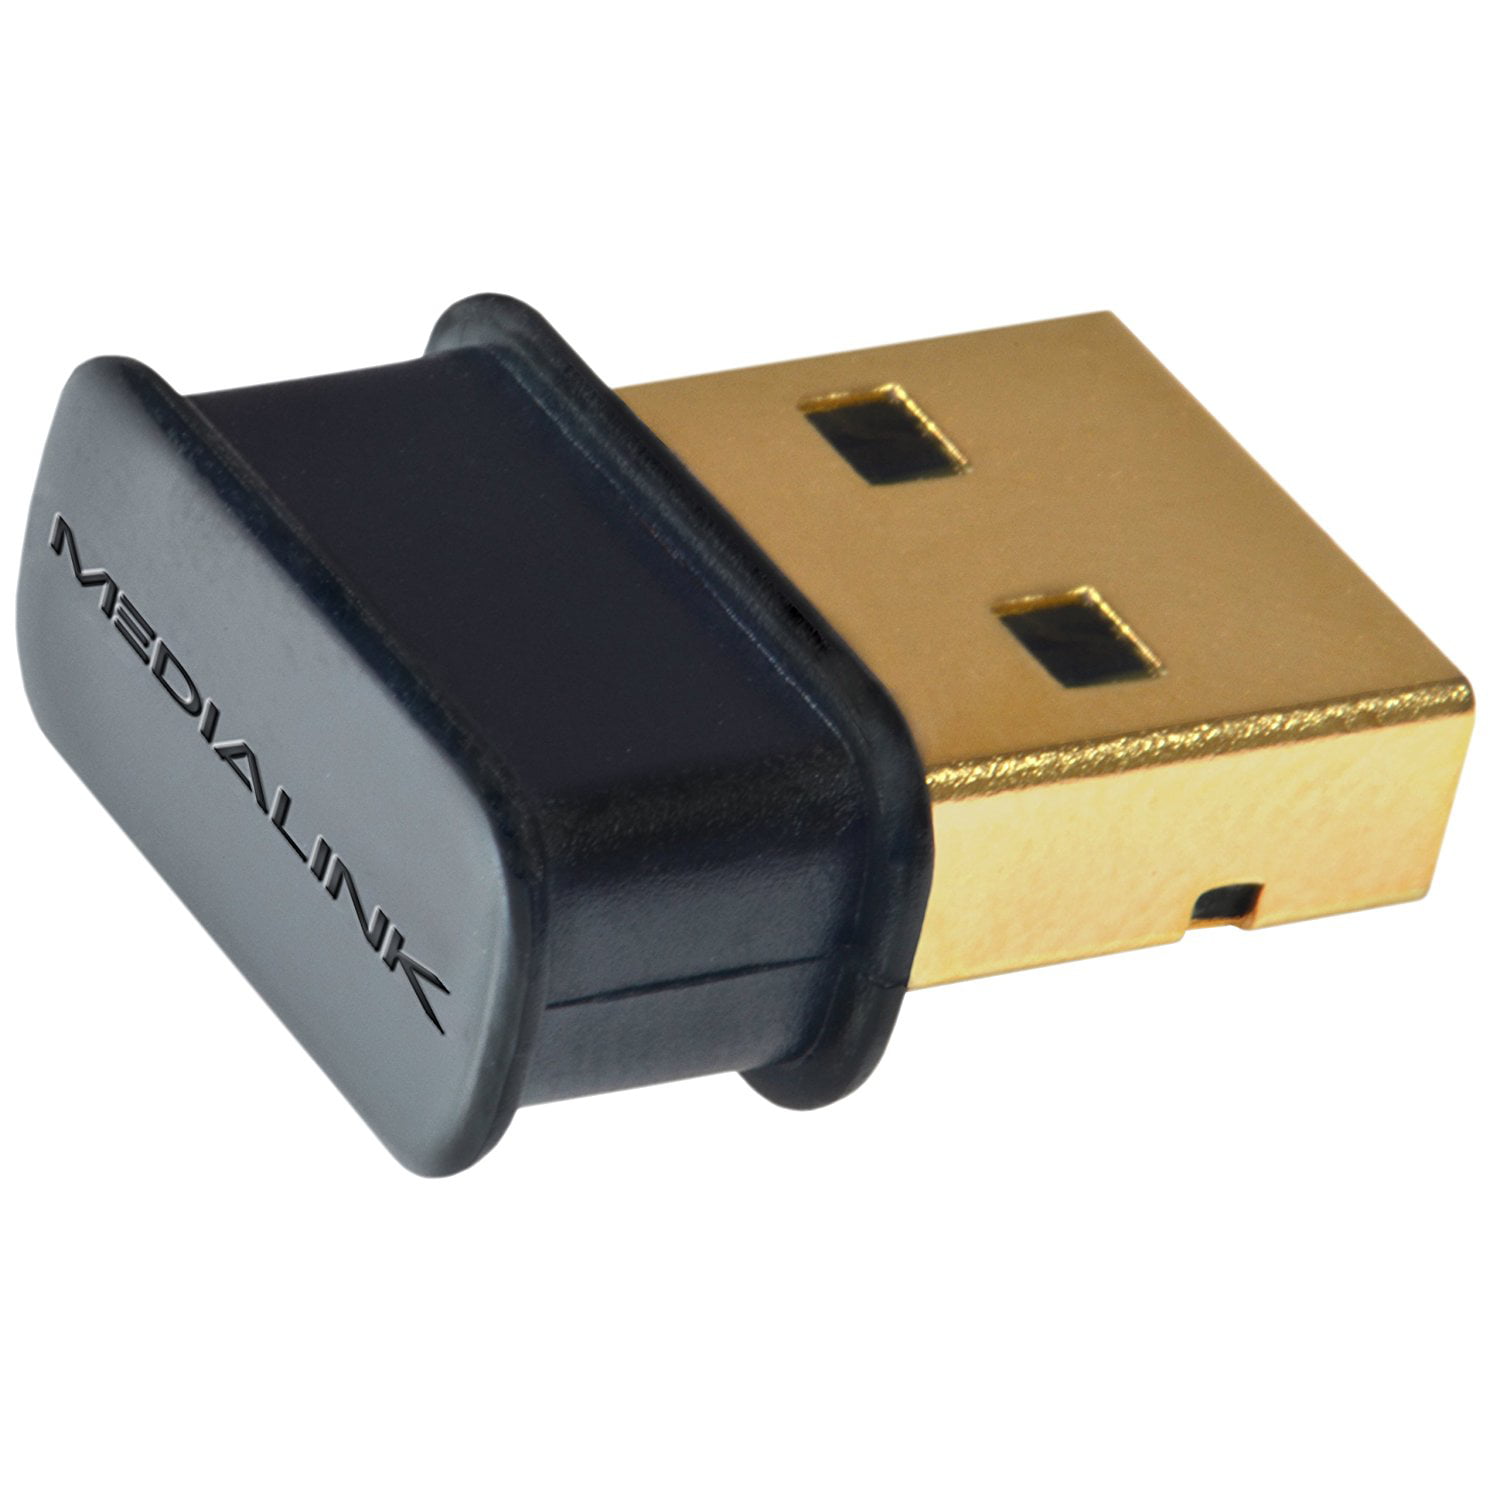 Drivers bluetooth usb. USB WIFI адаптер 2.4/5.0 Bluetooth 4.2. Адаптер Bluetooth-USB BT-590. Bluetooth USB адаптер Broadcom. USB Bluetooth 5 0 адаптер драйвер.